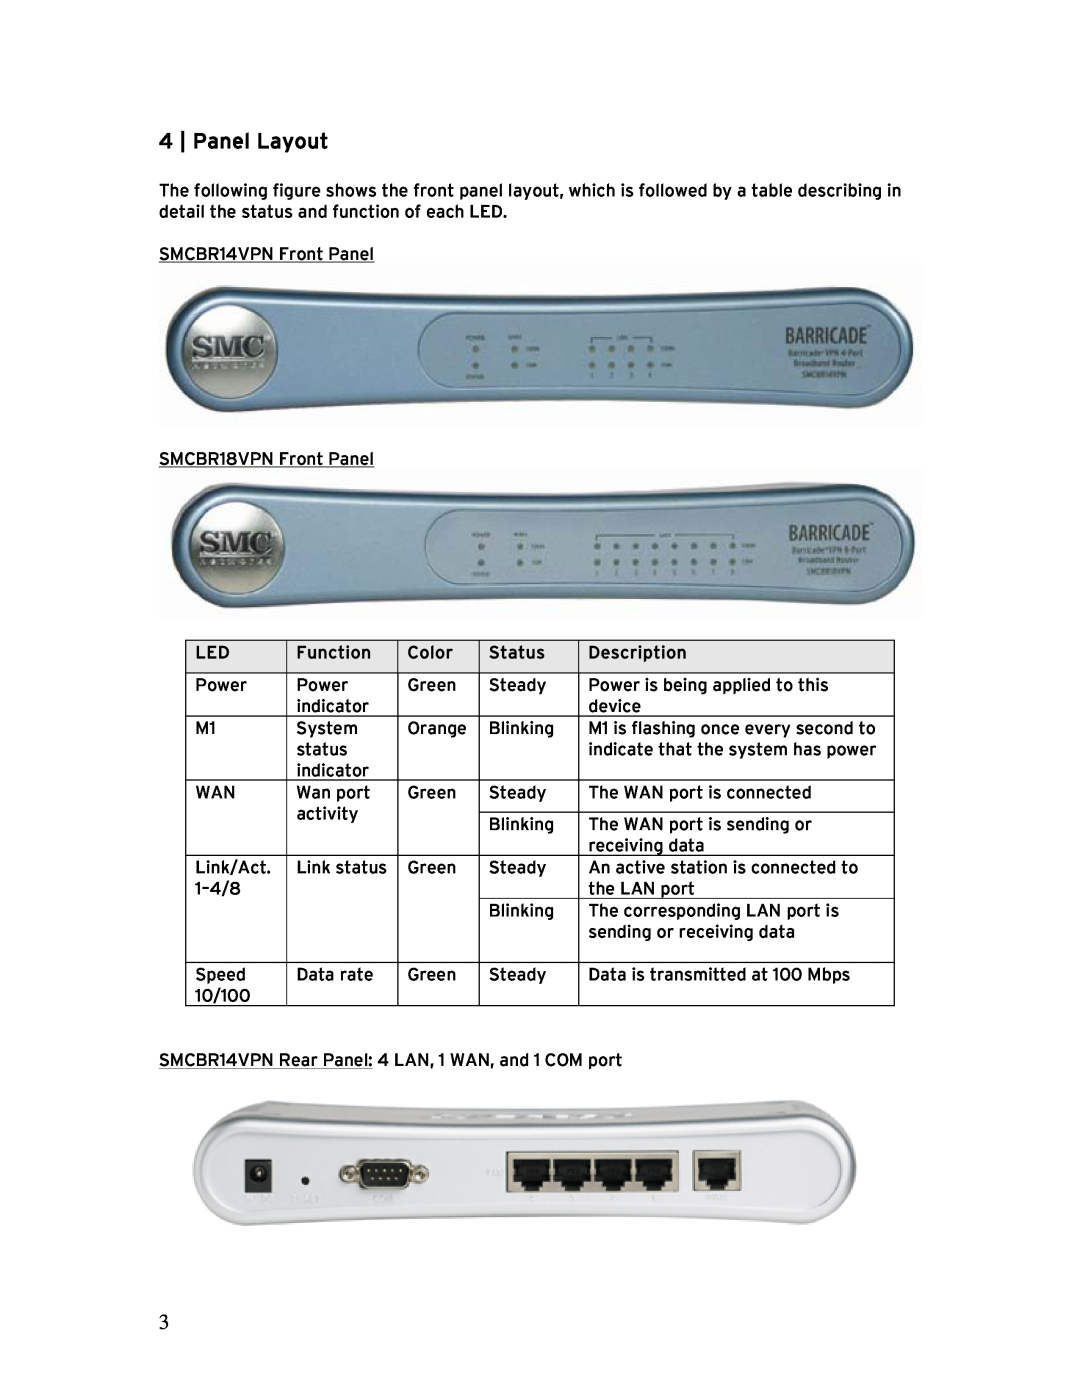 SMC Networks BR14VPN, SMCBR 18VPN manual Panel Layout, Function, Color, Status, Description 